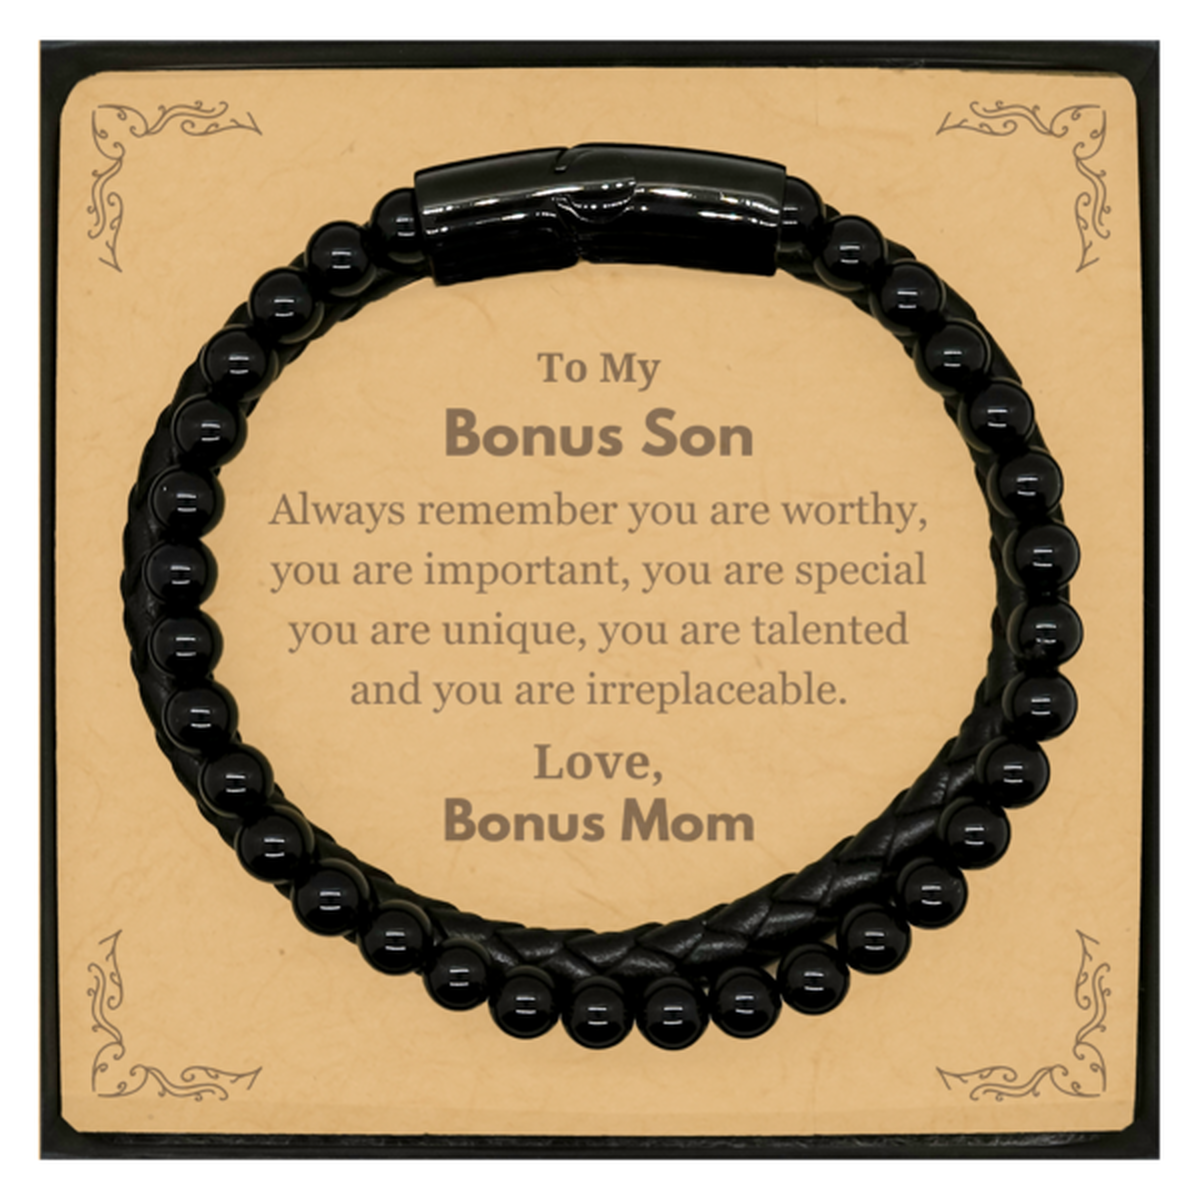 Bonus Son Birthday Gifts from Bonus Mom, Inspirational Stone Leather Bracelets for Bonus Son Christmas Graduation Gifts for Bonus Son Always remember you are worthy, you are important. Love, Bonus Mom